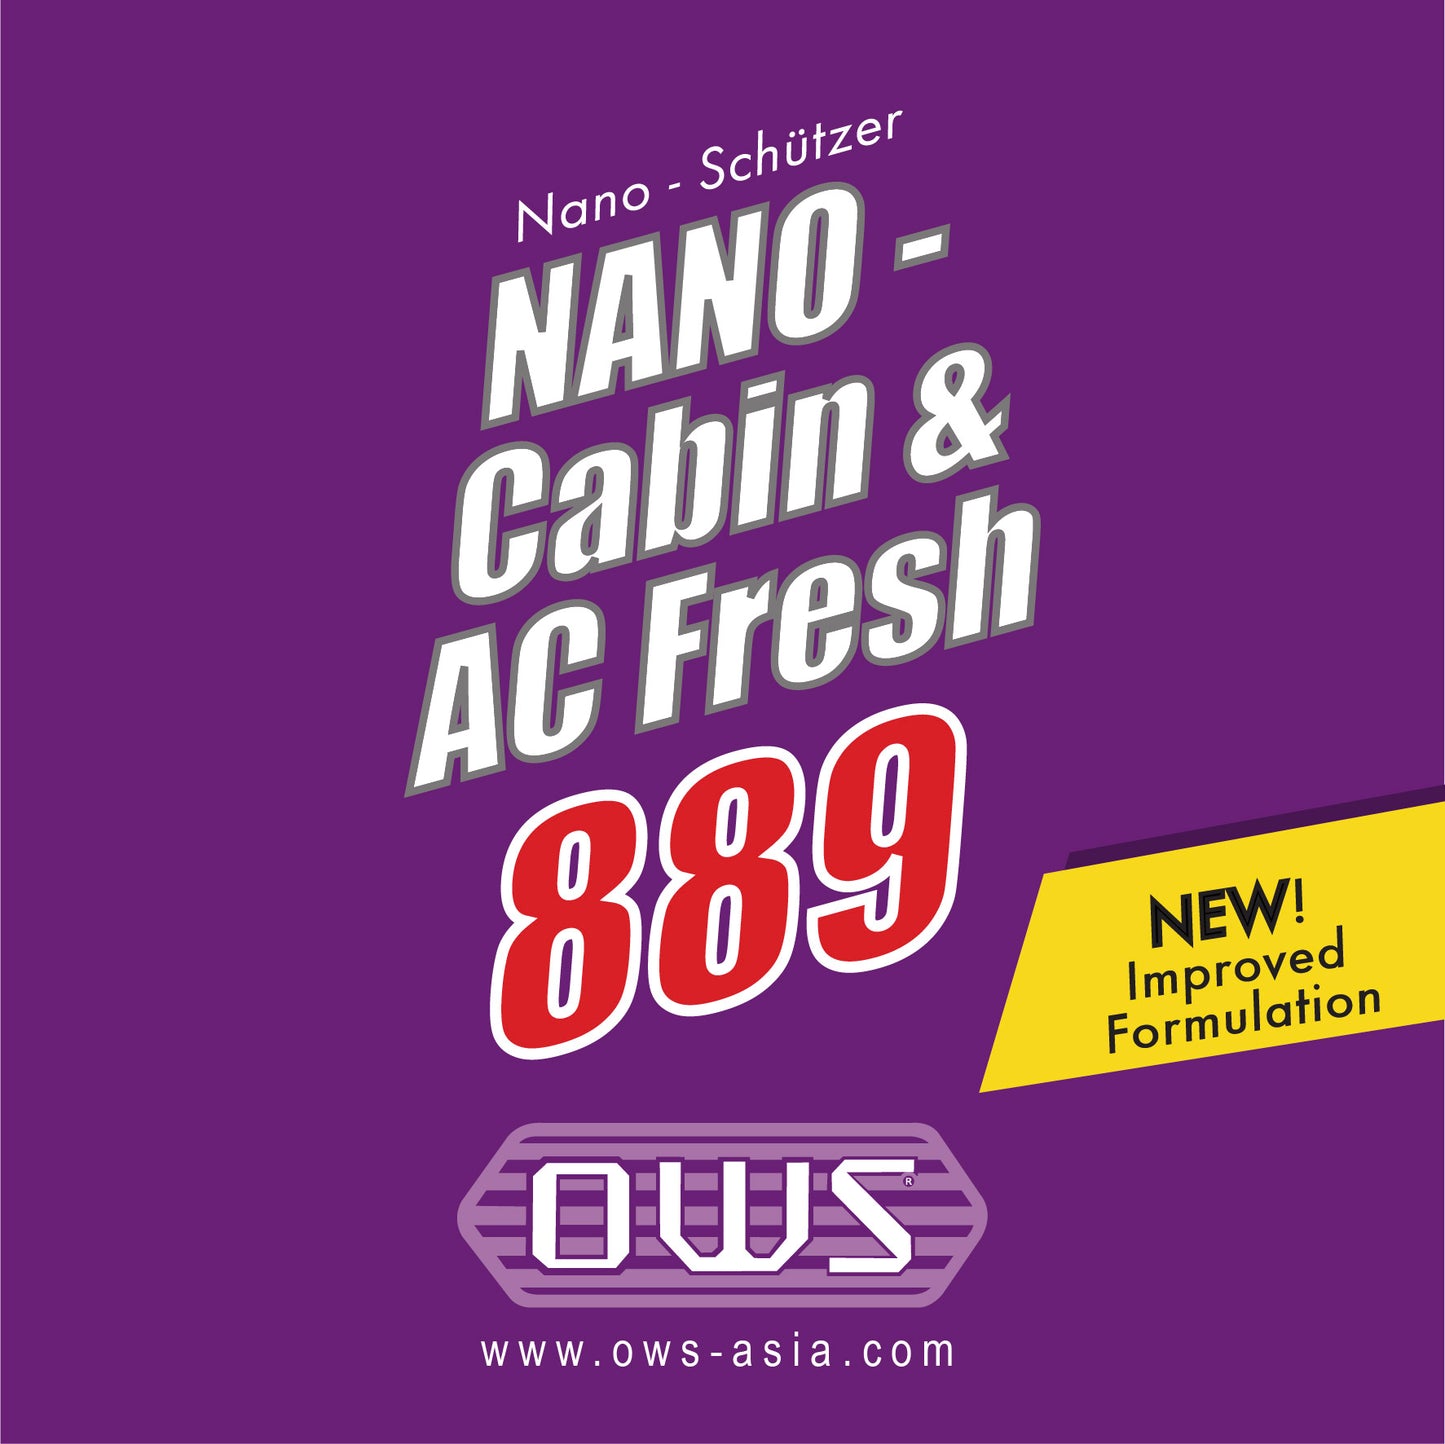 OWS 889 NANO Cabin & AC Fresh